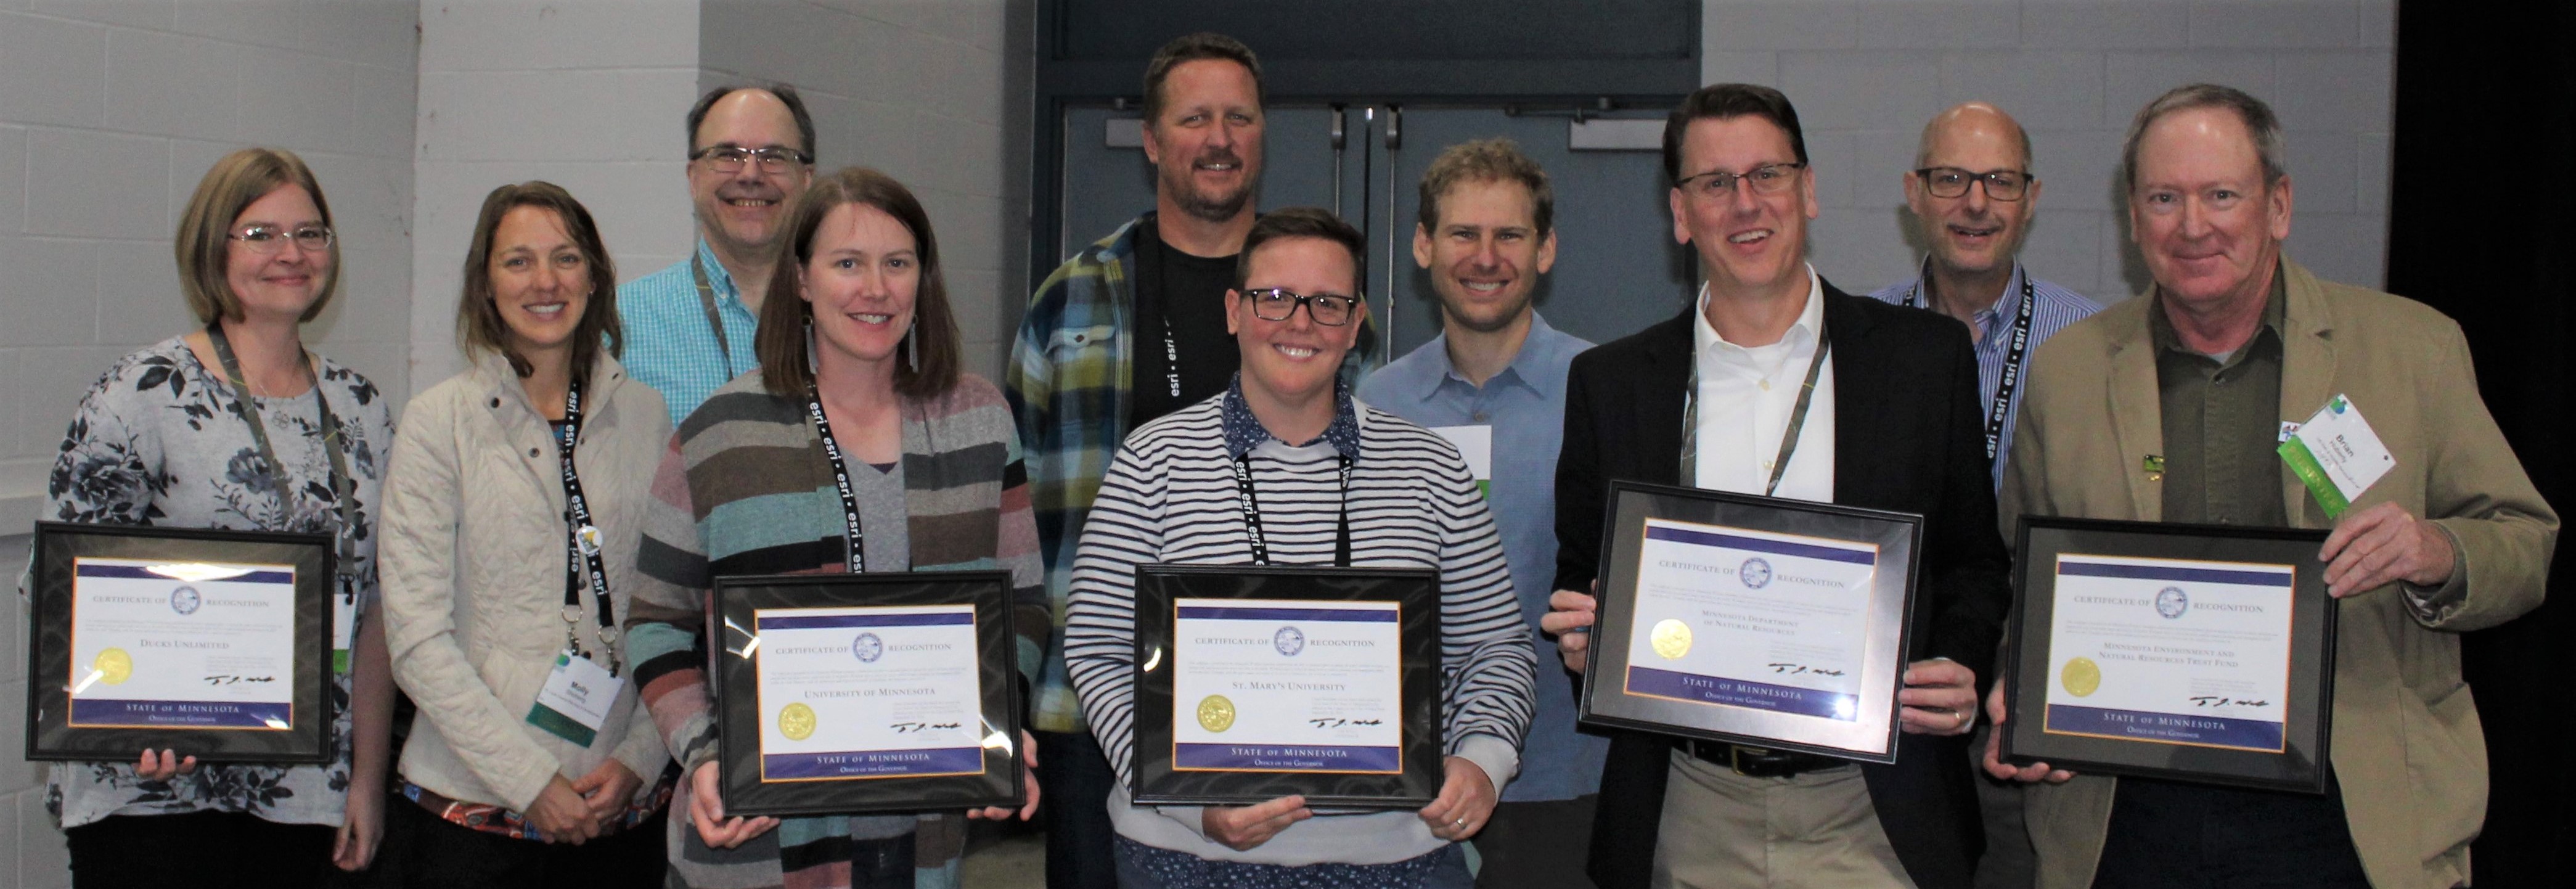 Minnesota Wetland Update project reps accepting award